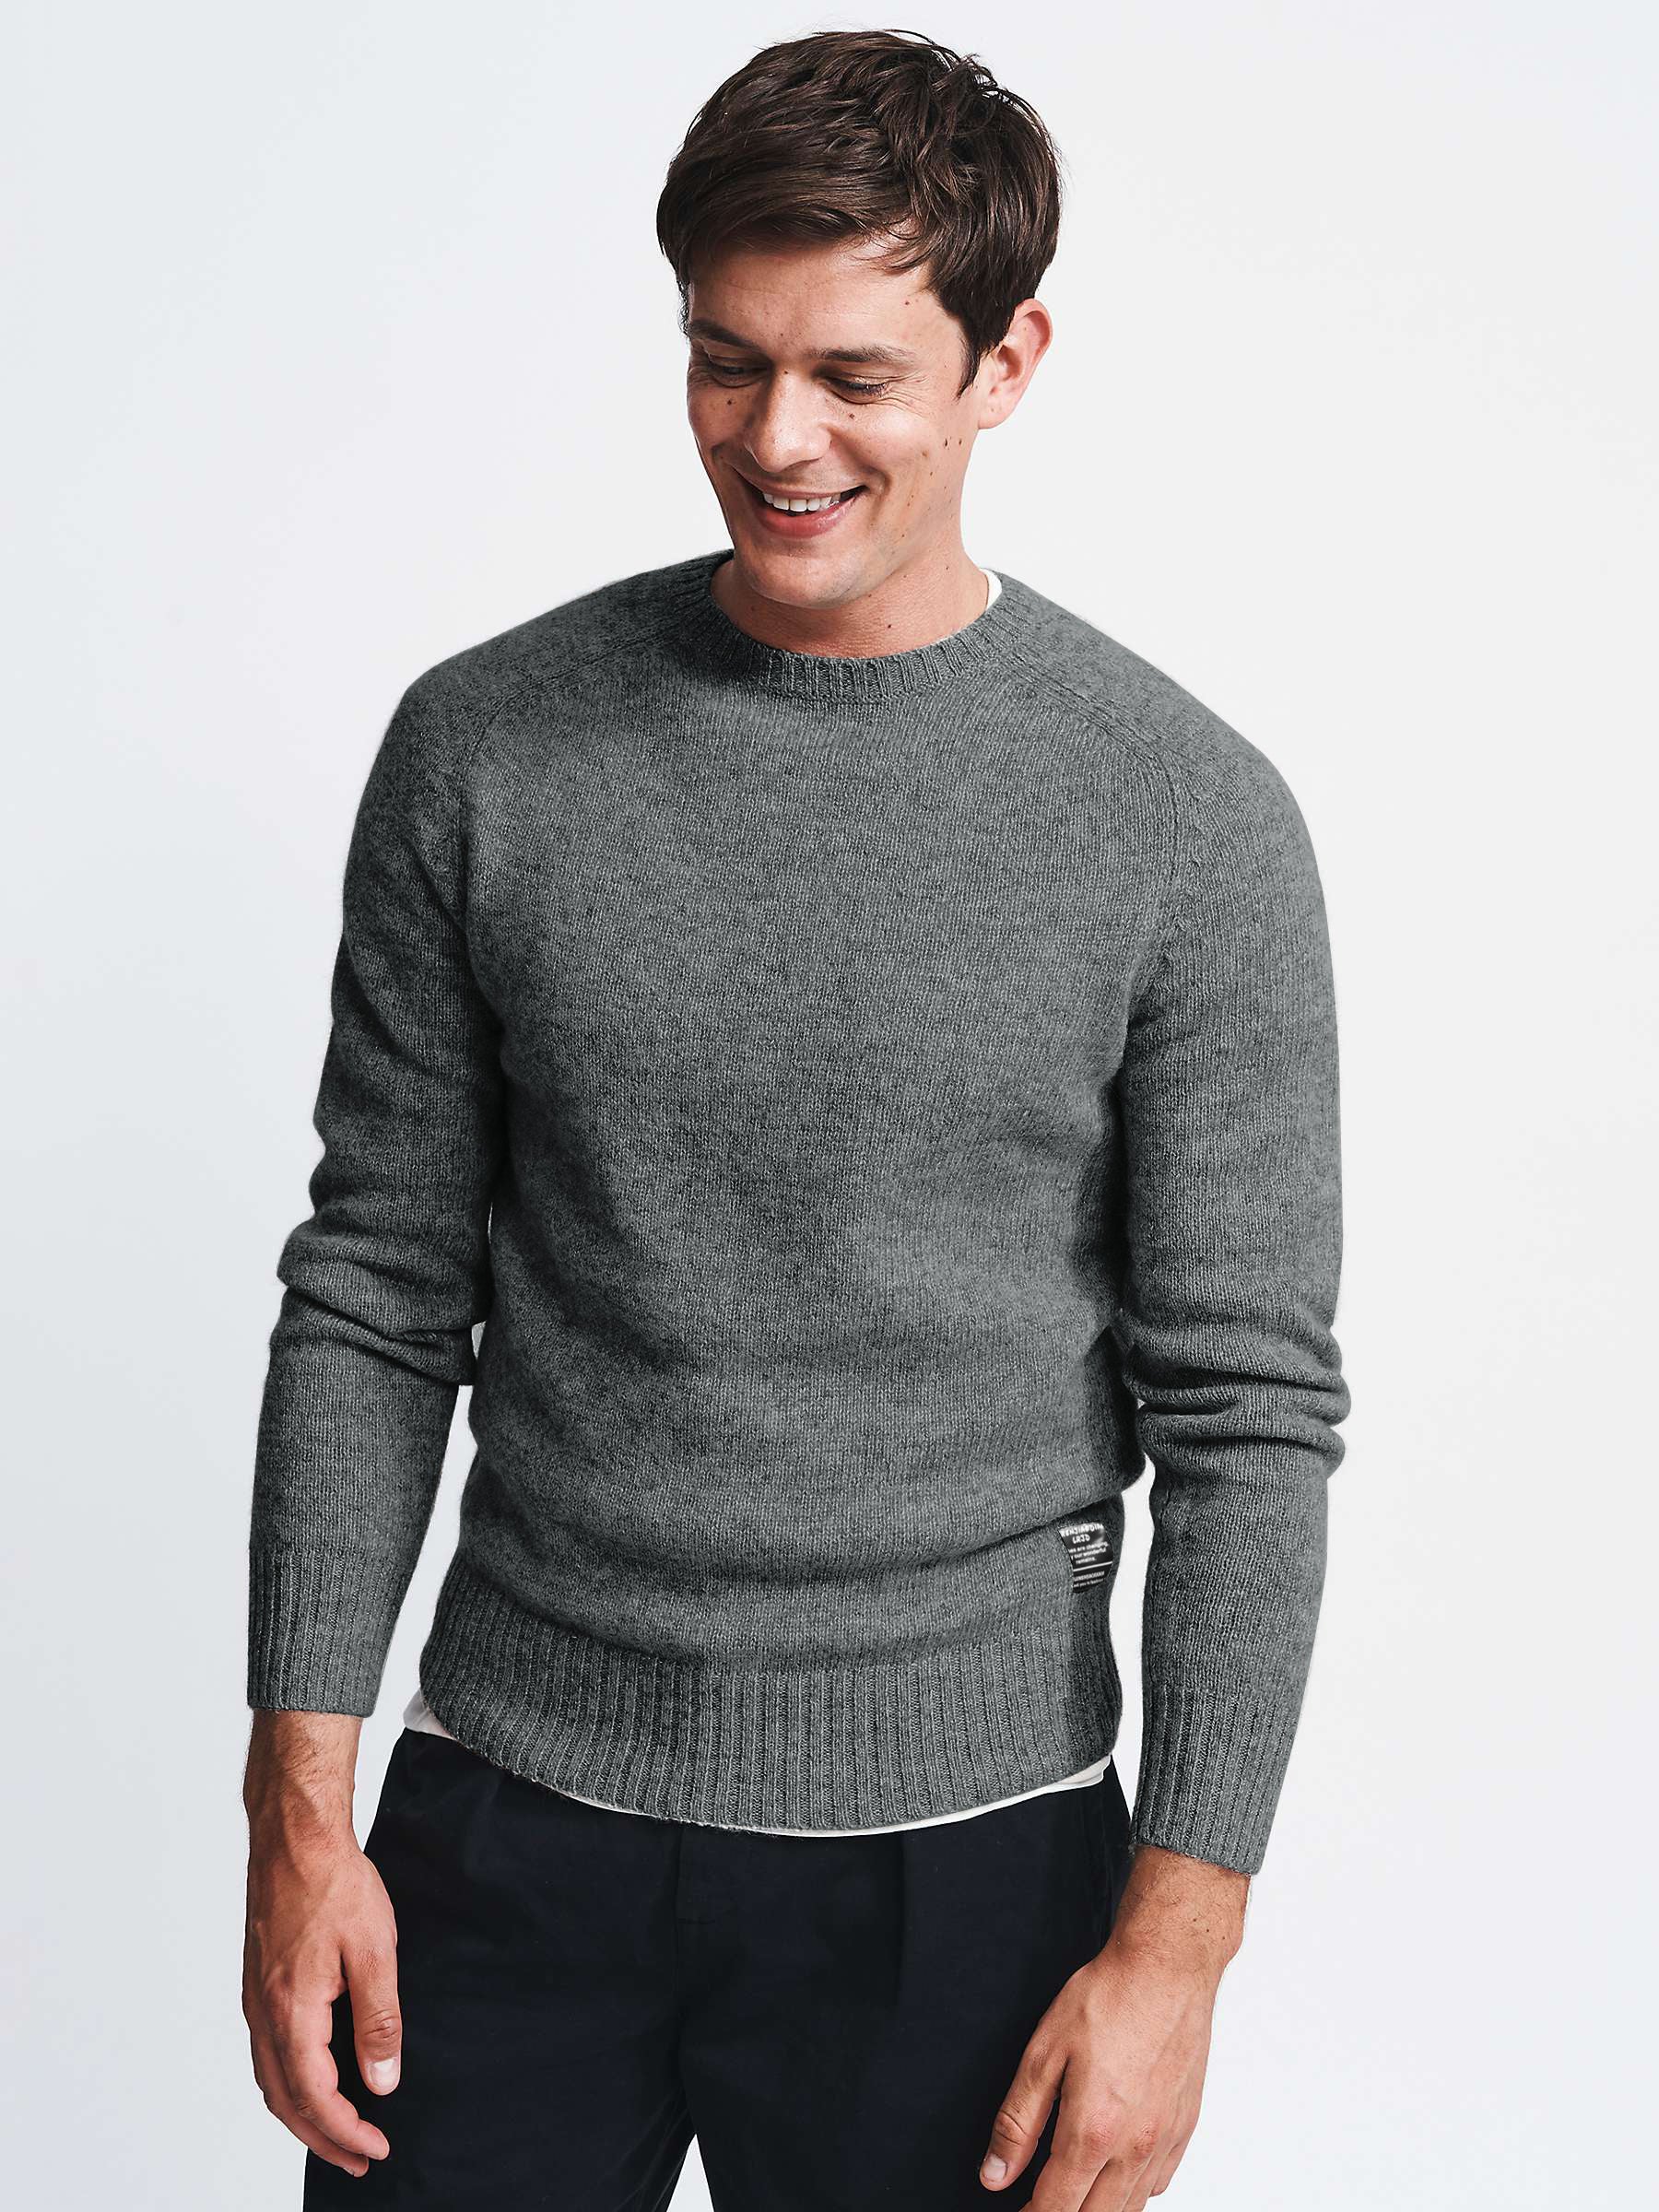 Fashion Crew Neck Prestwick Wool Sweater For Men-Grey-SP1063/RT2210